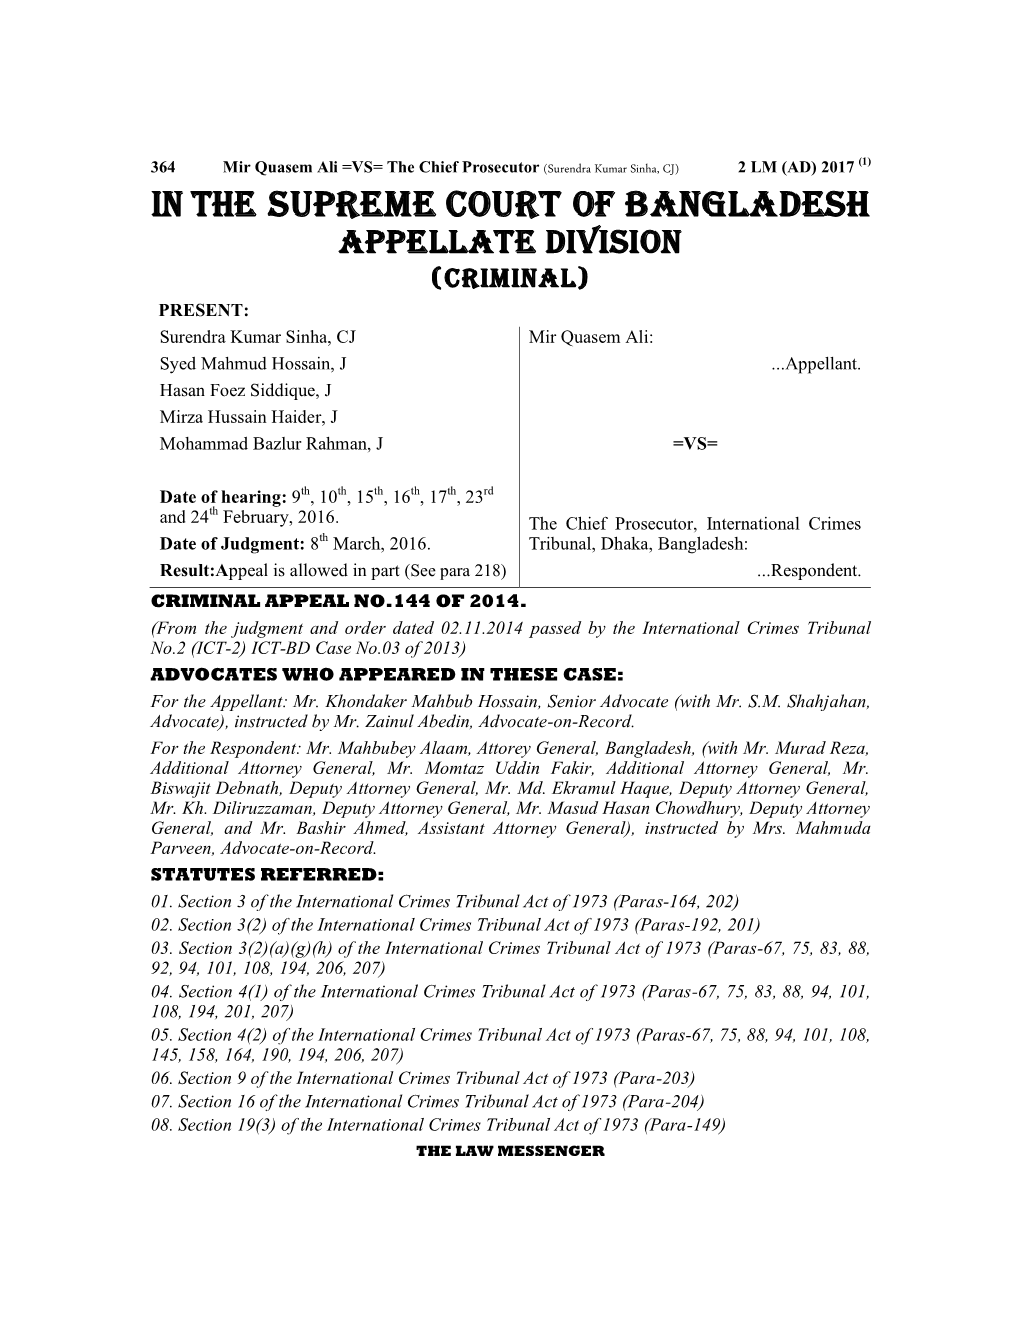 IN the SUPREME COURT of BANGLADESH APPELLATE DIVISION (Criminal) PRESENT: Surendra Kumar Sinha, CJ Mir Quasem Ali: Syed Mahmud Hossain, J ...Appellant